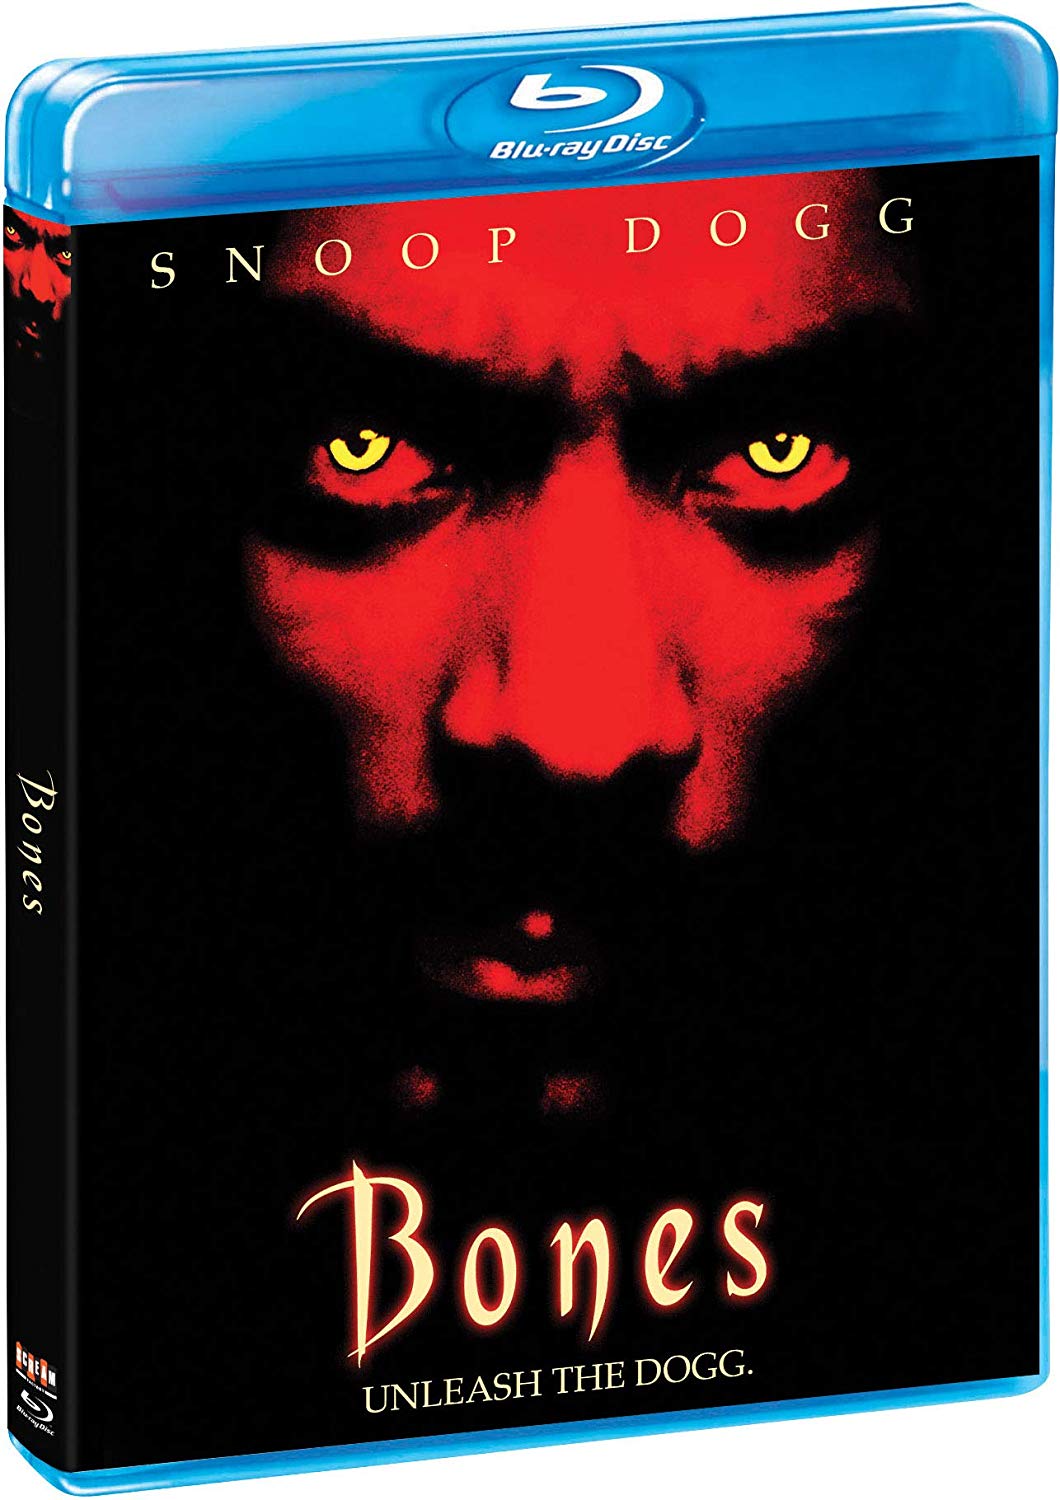 Snoop Dogg stars in 'Bones'